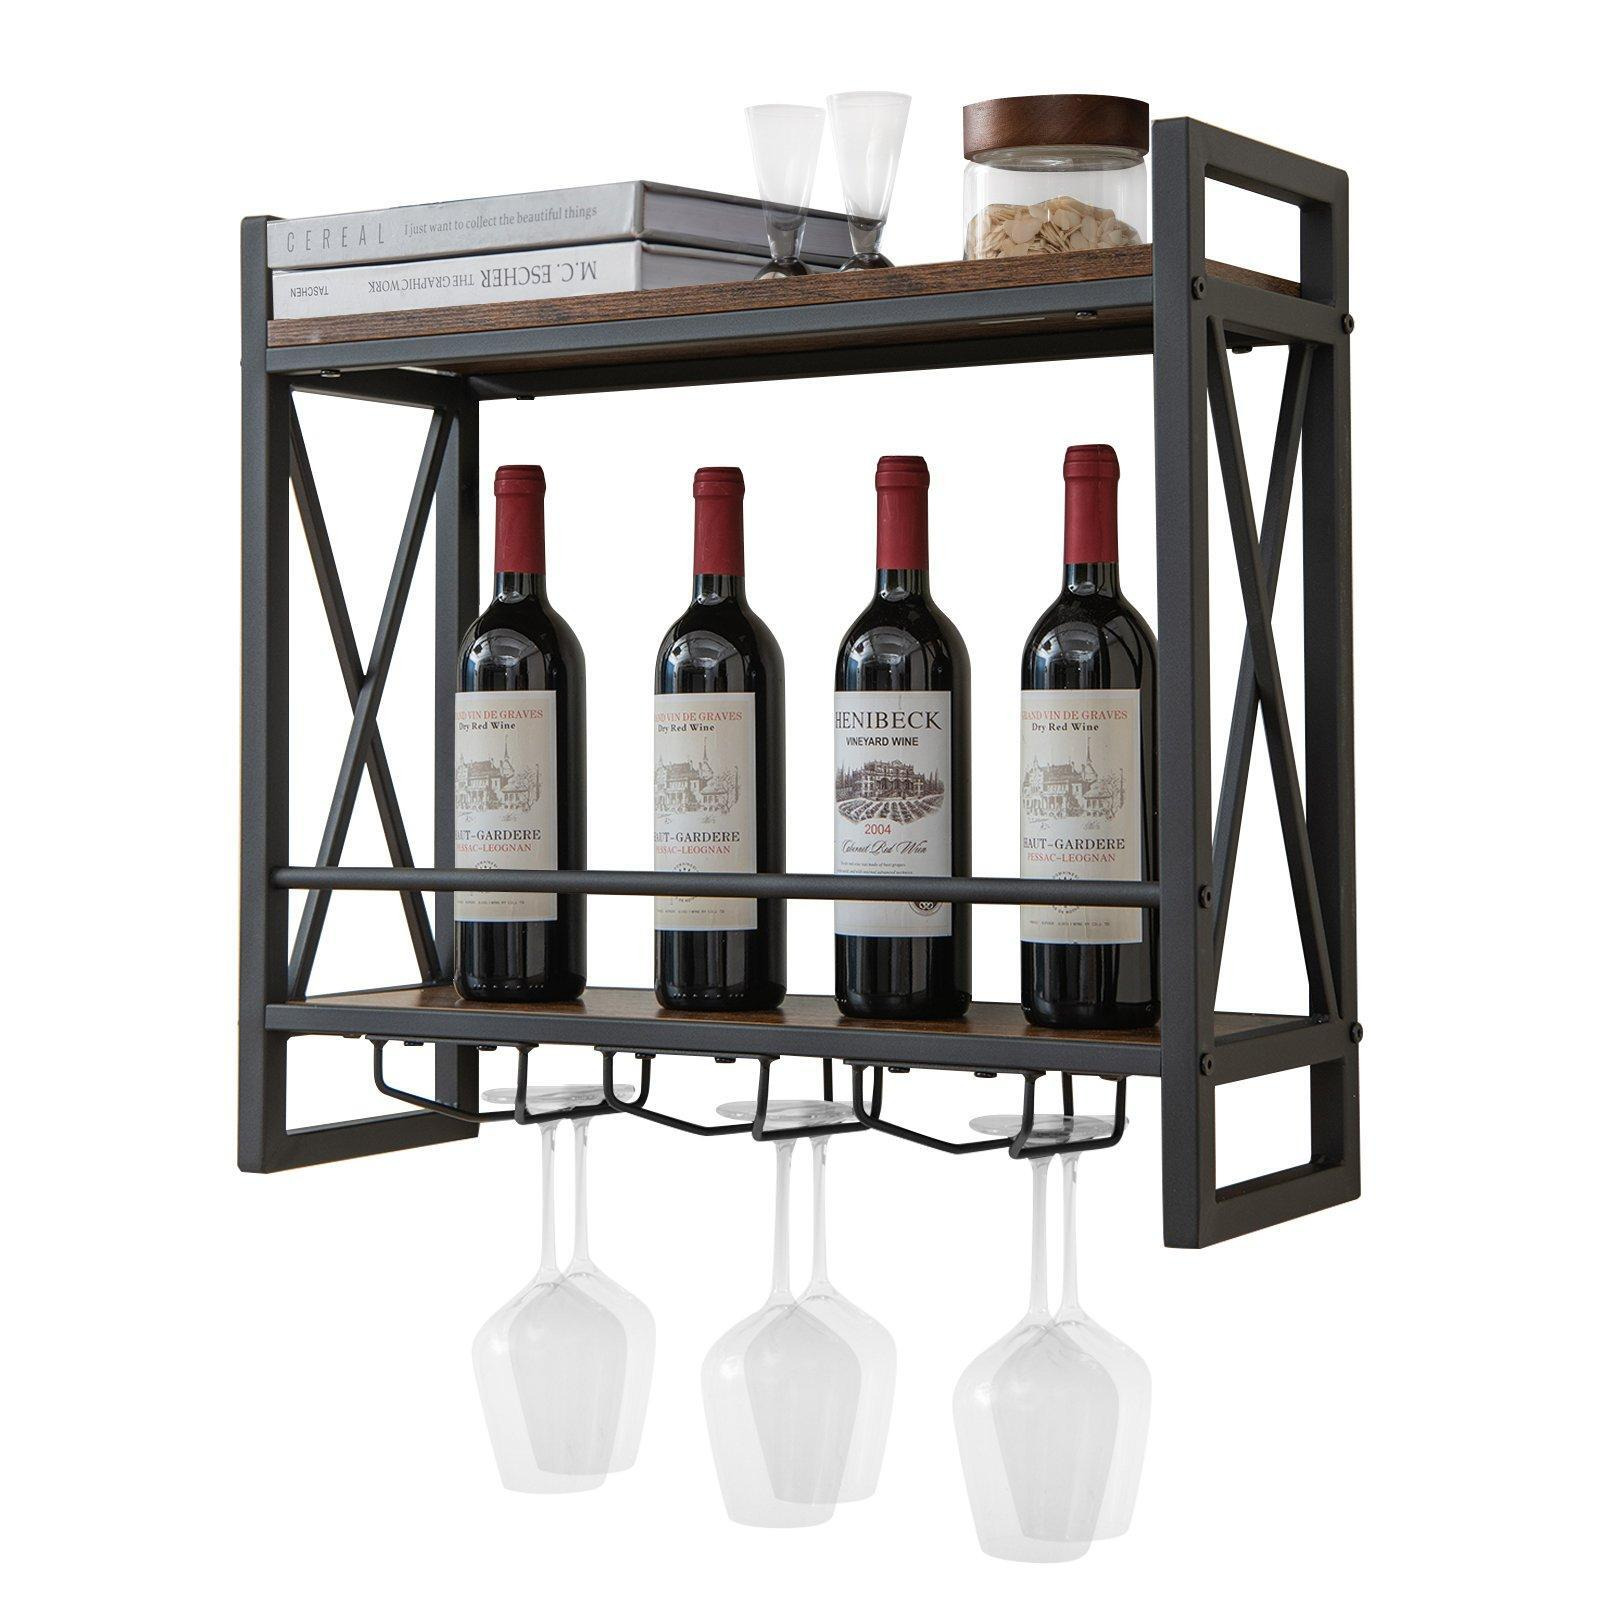 Industrial Wall Mounted Wine Rack Organizer Bottle Glass Holder Storage Display - image 1